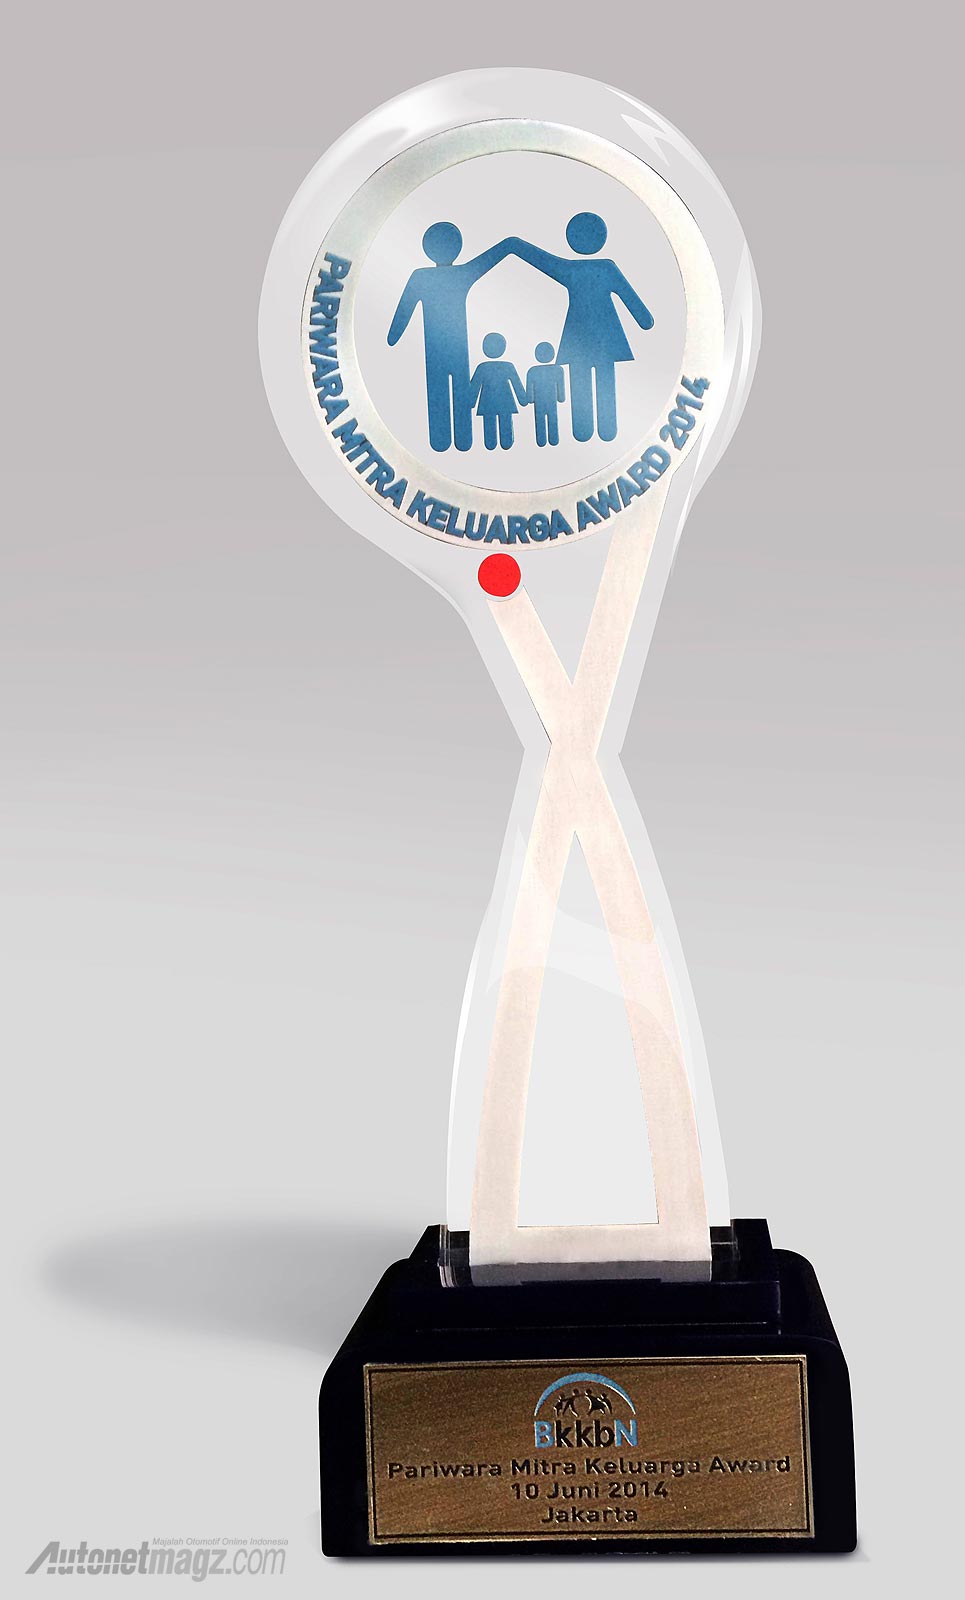 Nasional, Piala Pariwara Mitra Keluarga Award 2014 untuk Suzuki Ertiga Indonesia dari BKKBN: Suzuki Ertiga Mendapat Penghargaan ‘Pariwara Mitra Keluarga Award 2014’ dari BKKBN